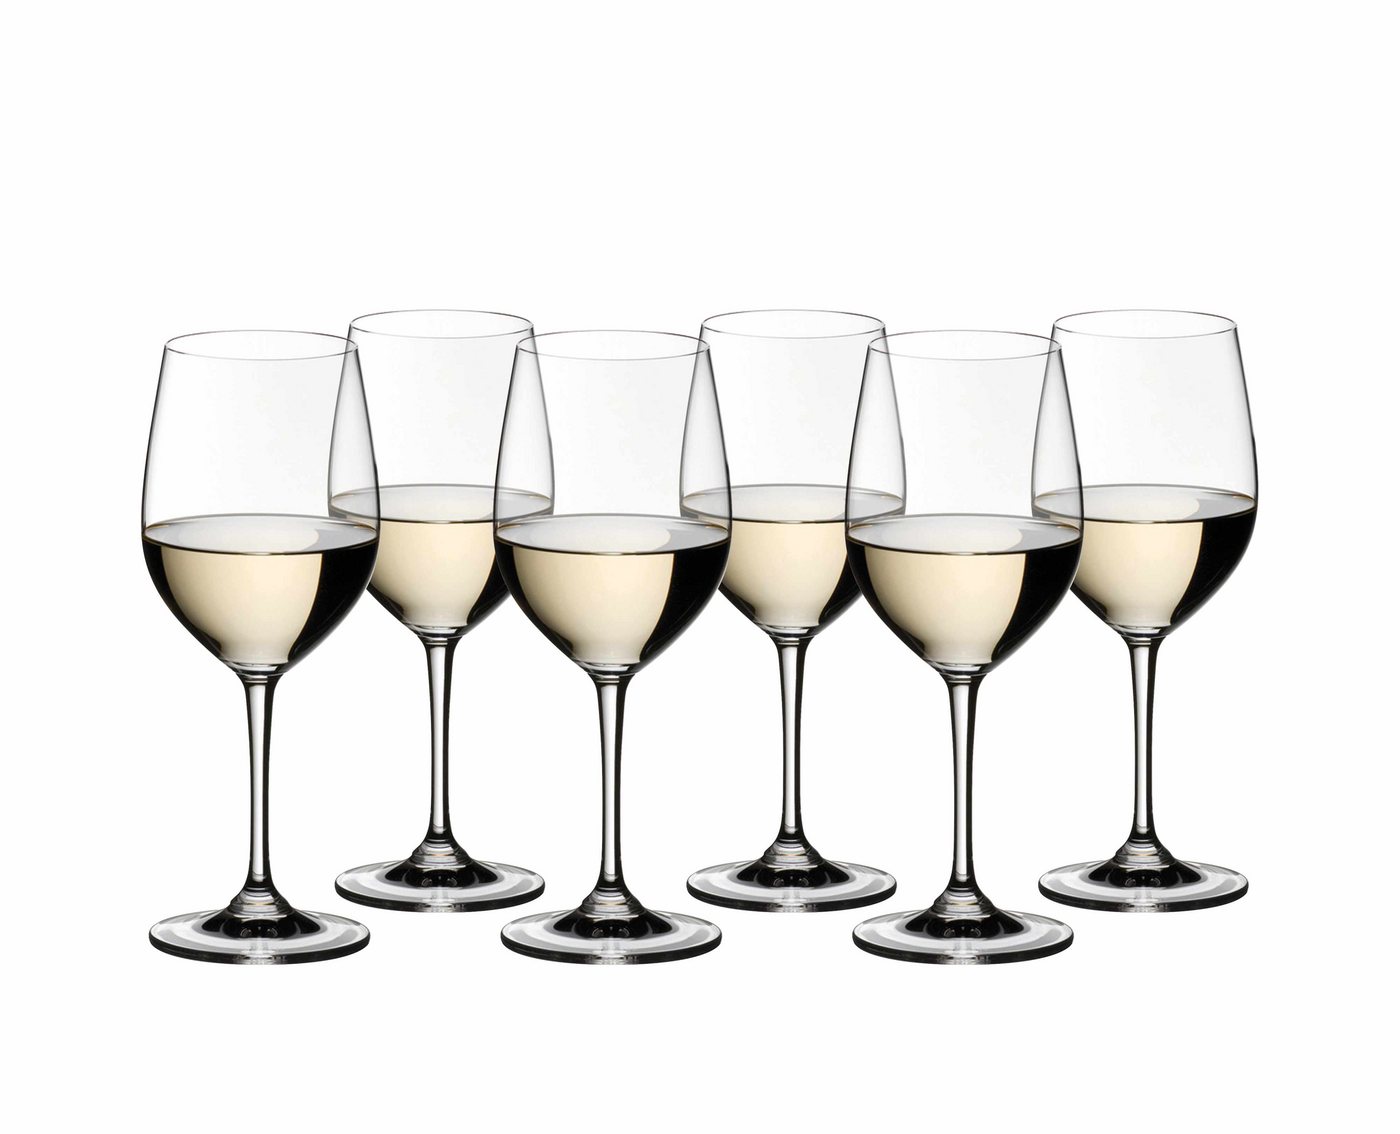 RIEDEL THE WINE GLASS COMPANY Glas Riedel 7416/05 Vinum Aktionsset Chardonnay 8tlg Pay 6 Get 8, Glas von RIEDEL THE WINE GLASS COMPANY